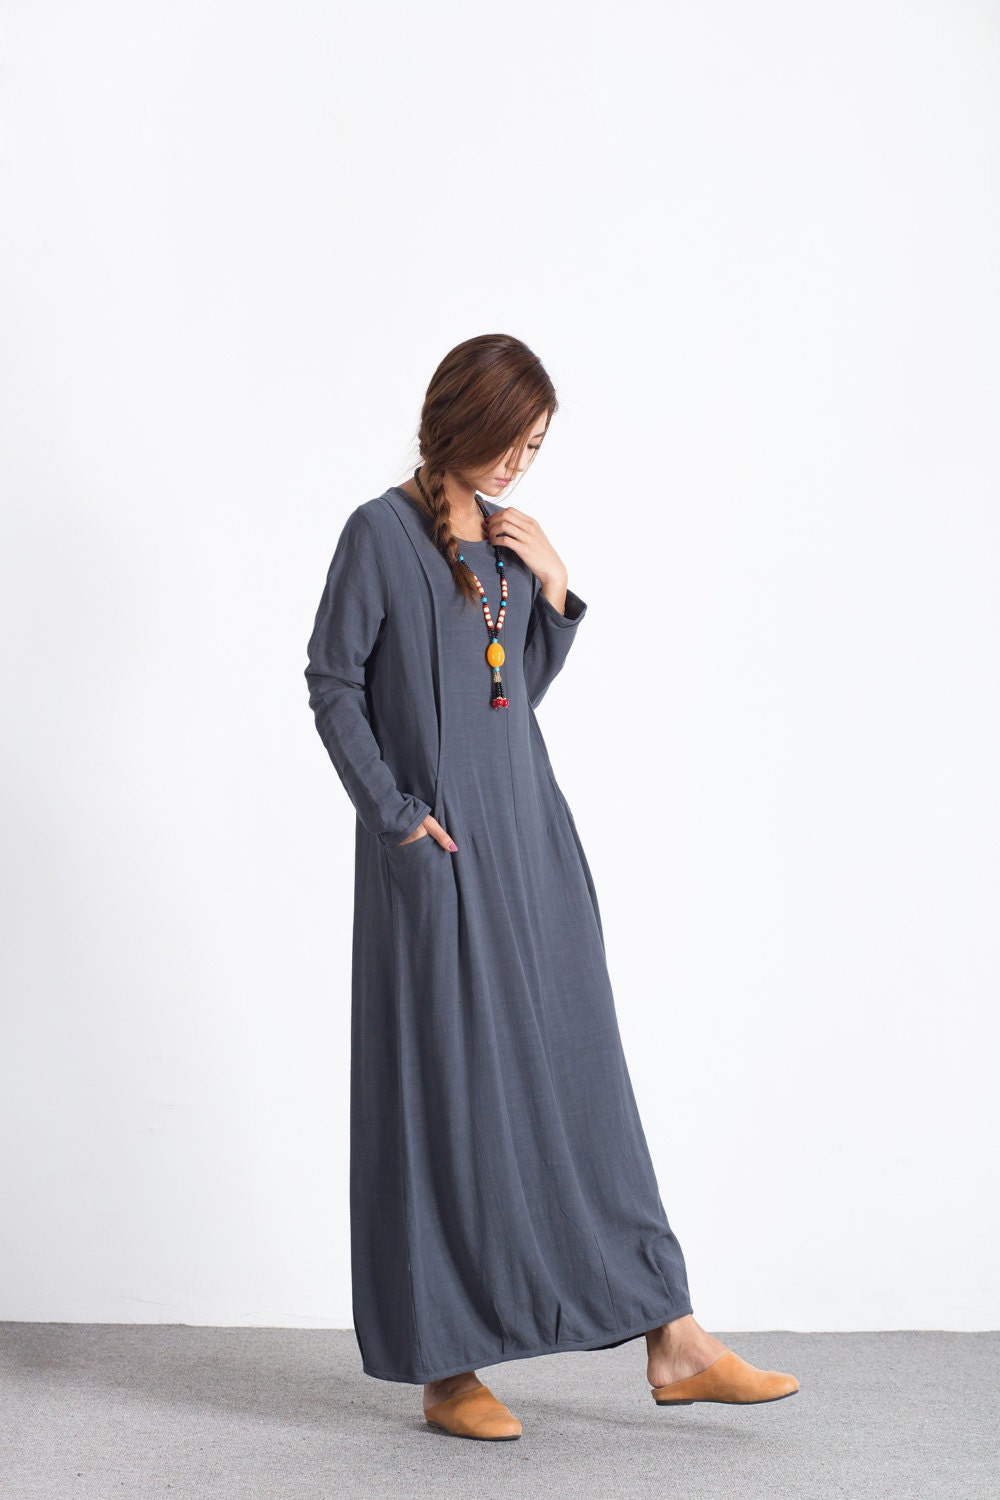 Women's linen long sleeves maxi dress linen cotton Spring | Etsy